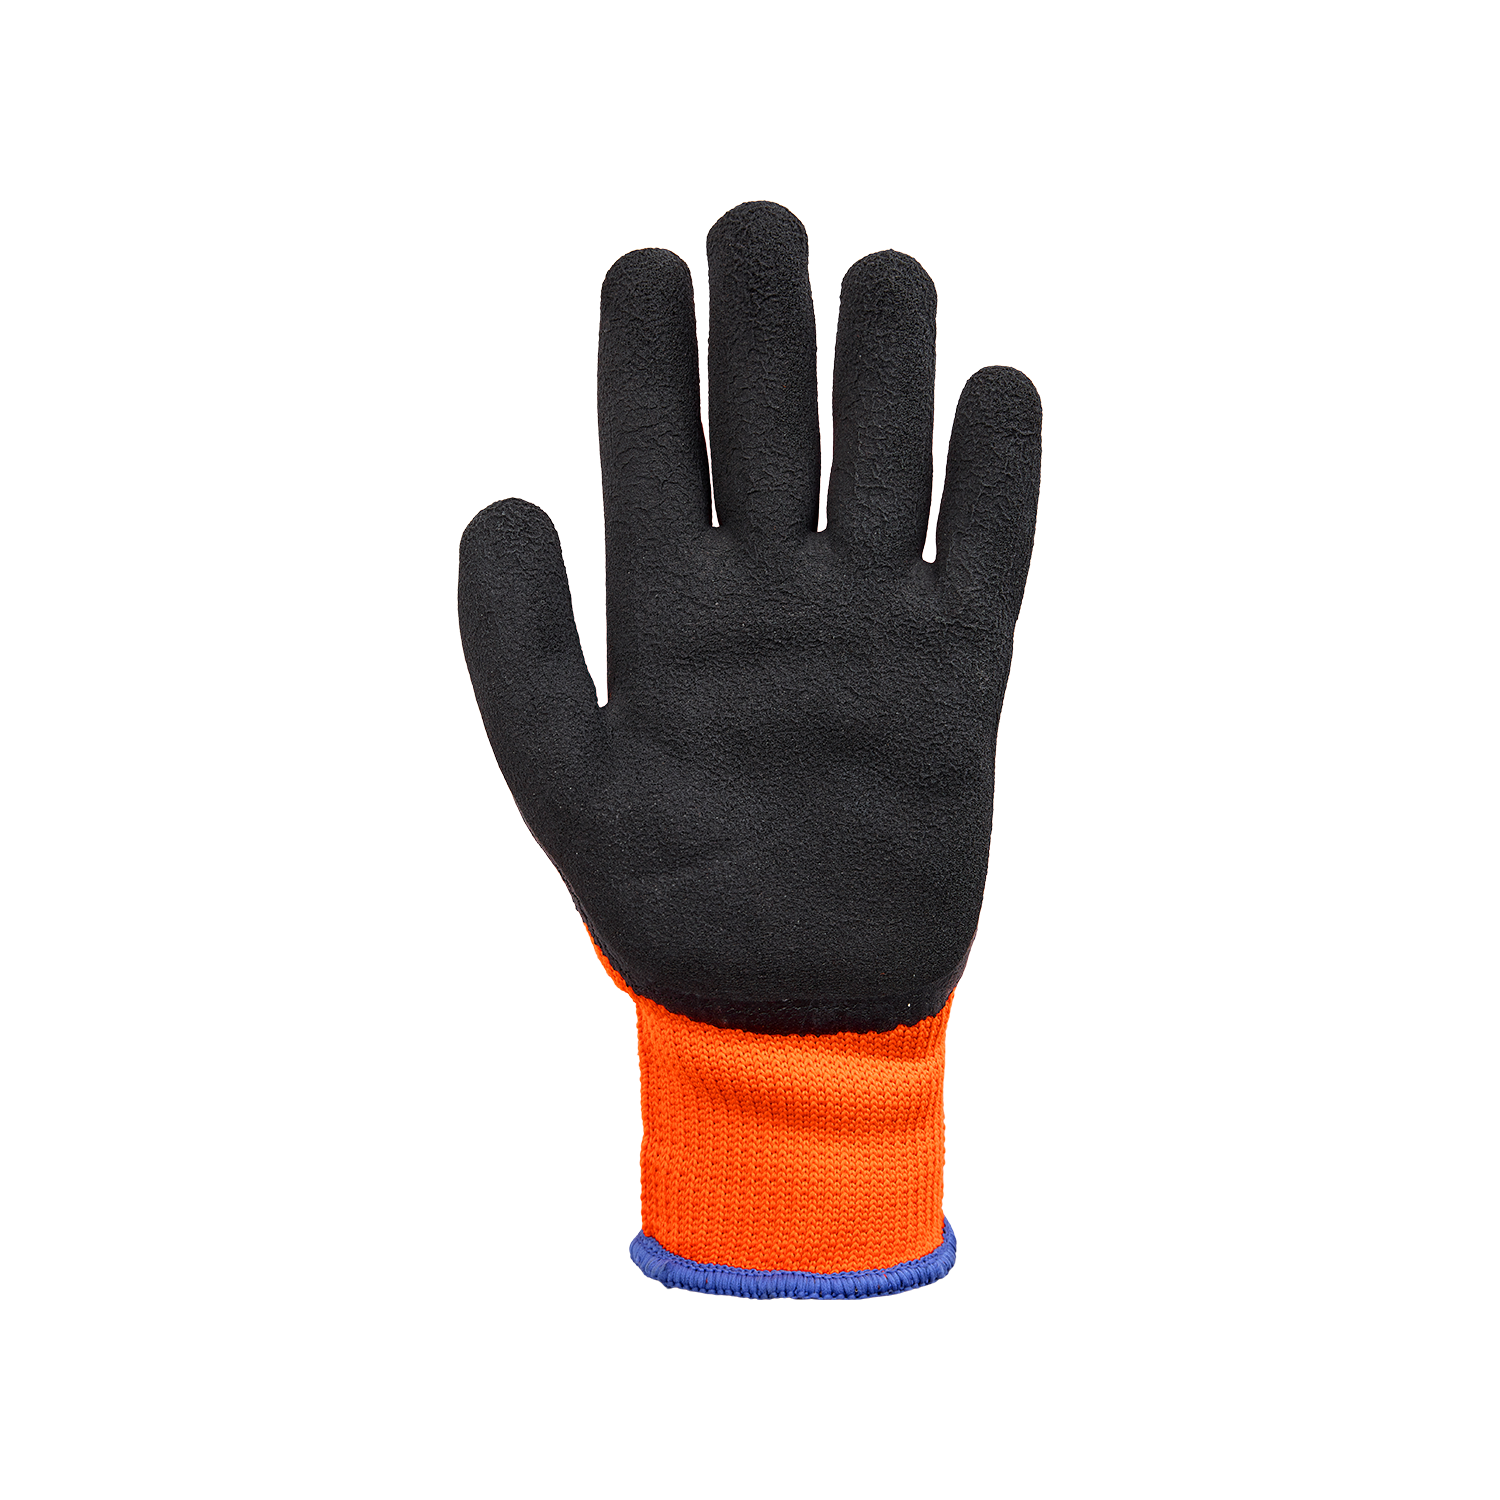 NORSE Polar winter assembly gloves size 11